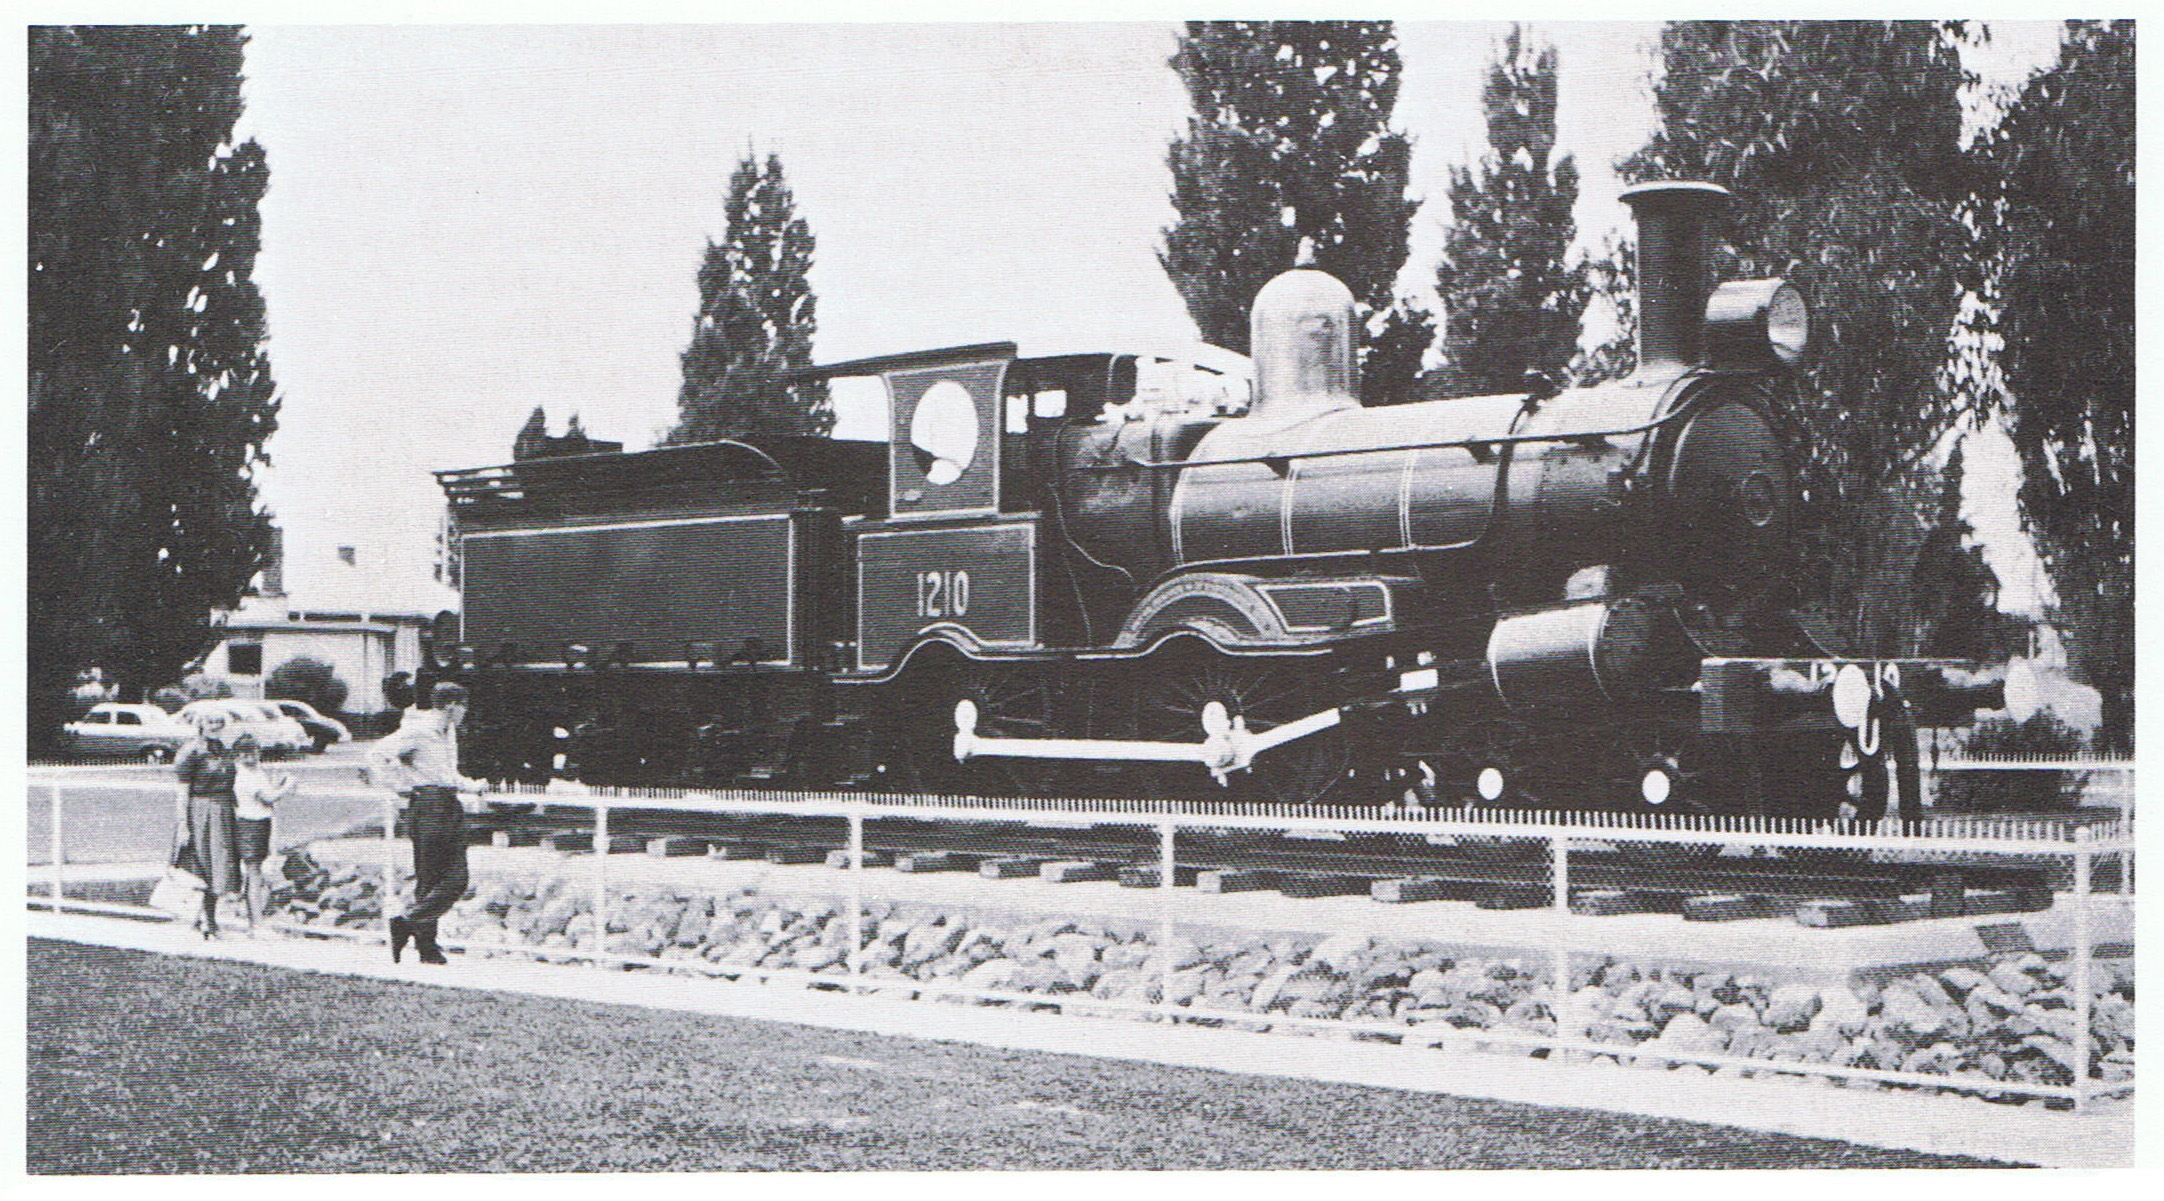 Locomotive 1210